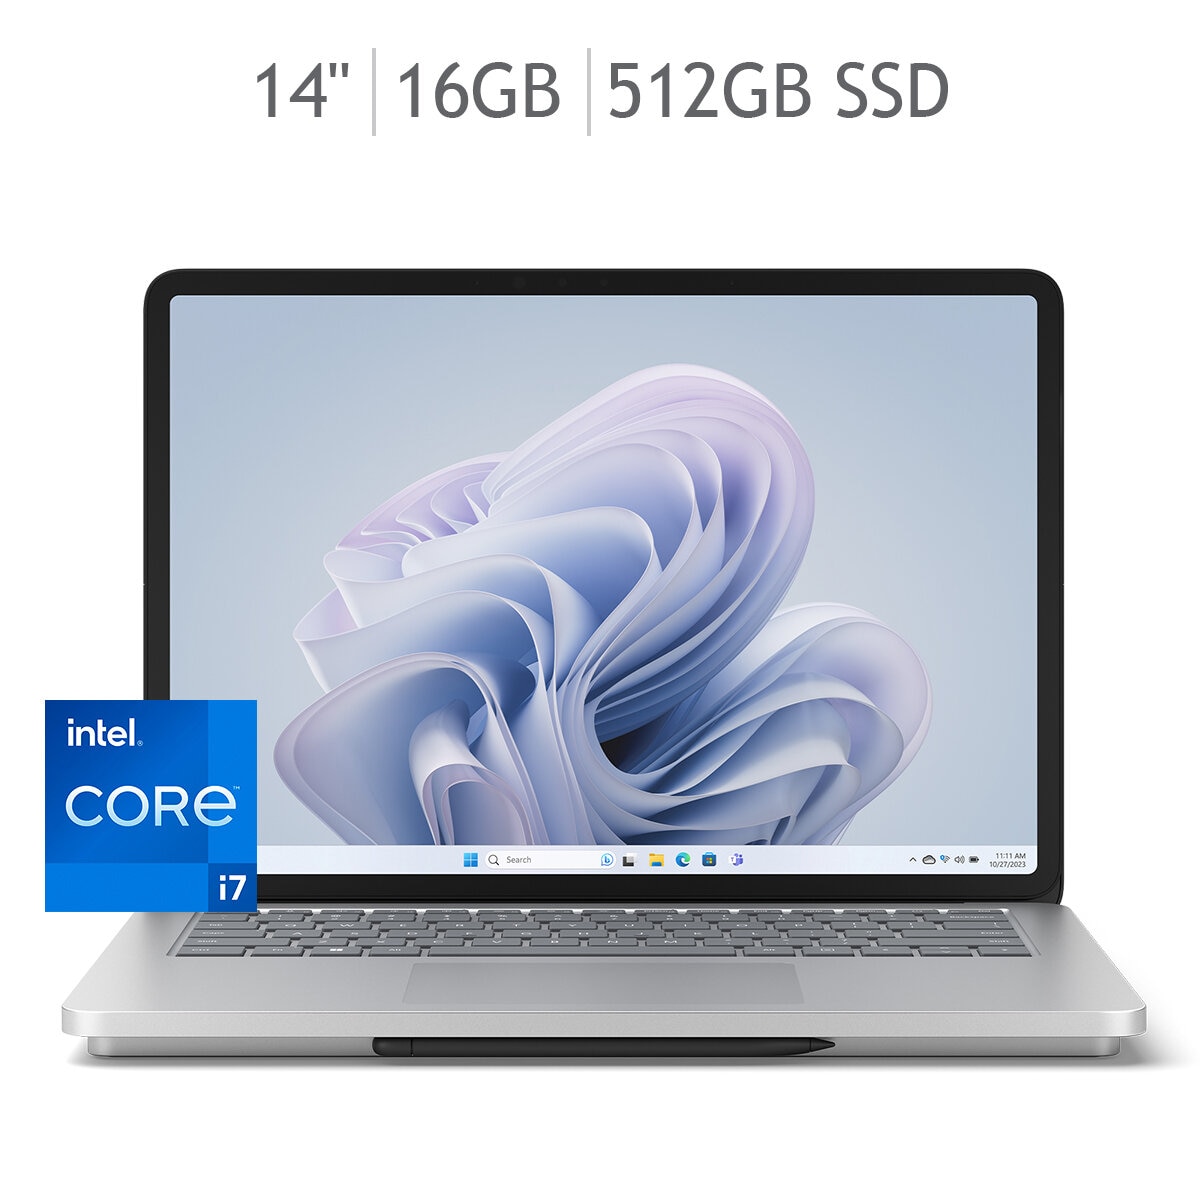 Microsoft Surface Studio 2 14" Quad HD Intel Core i7 16GB 512GB SSD